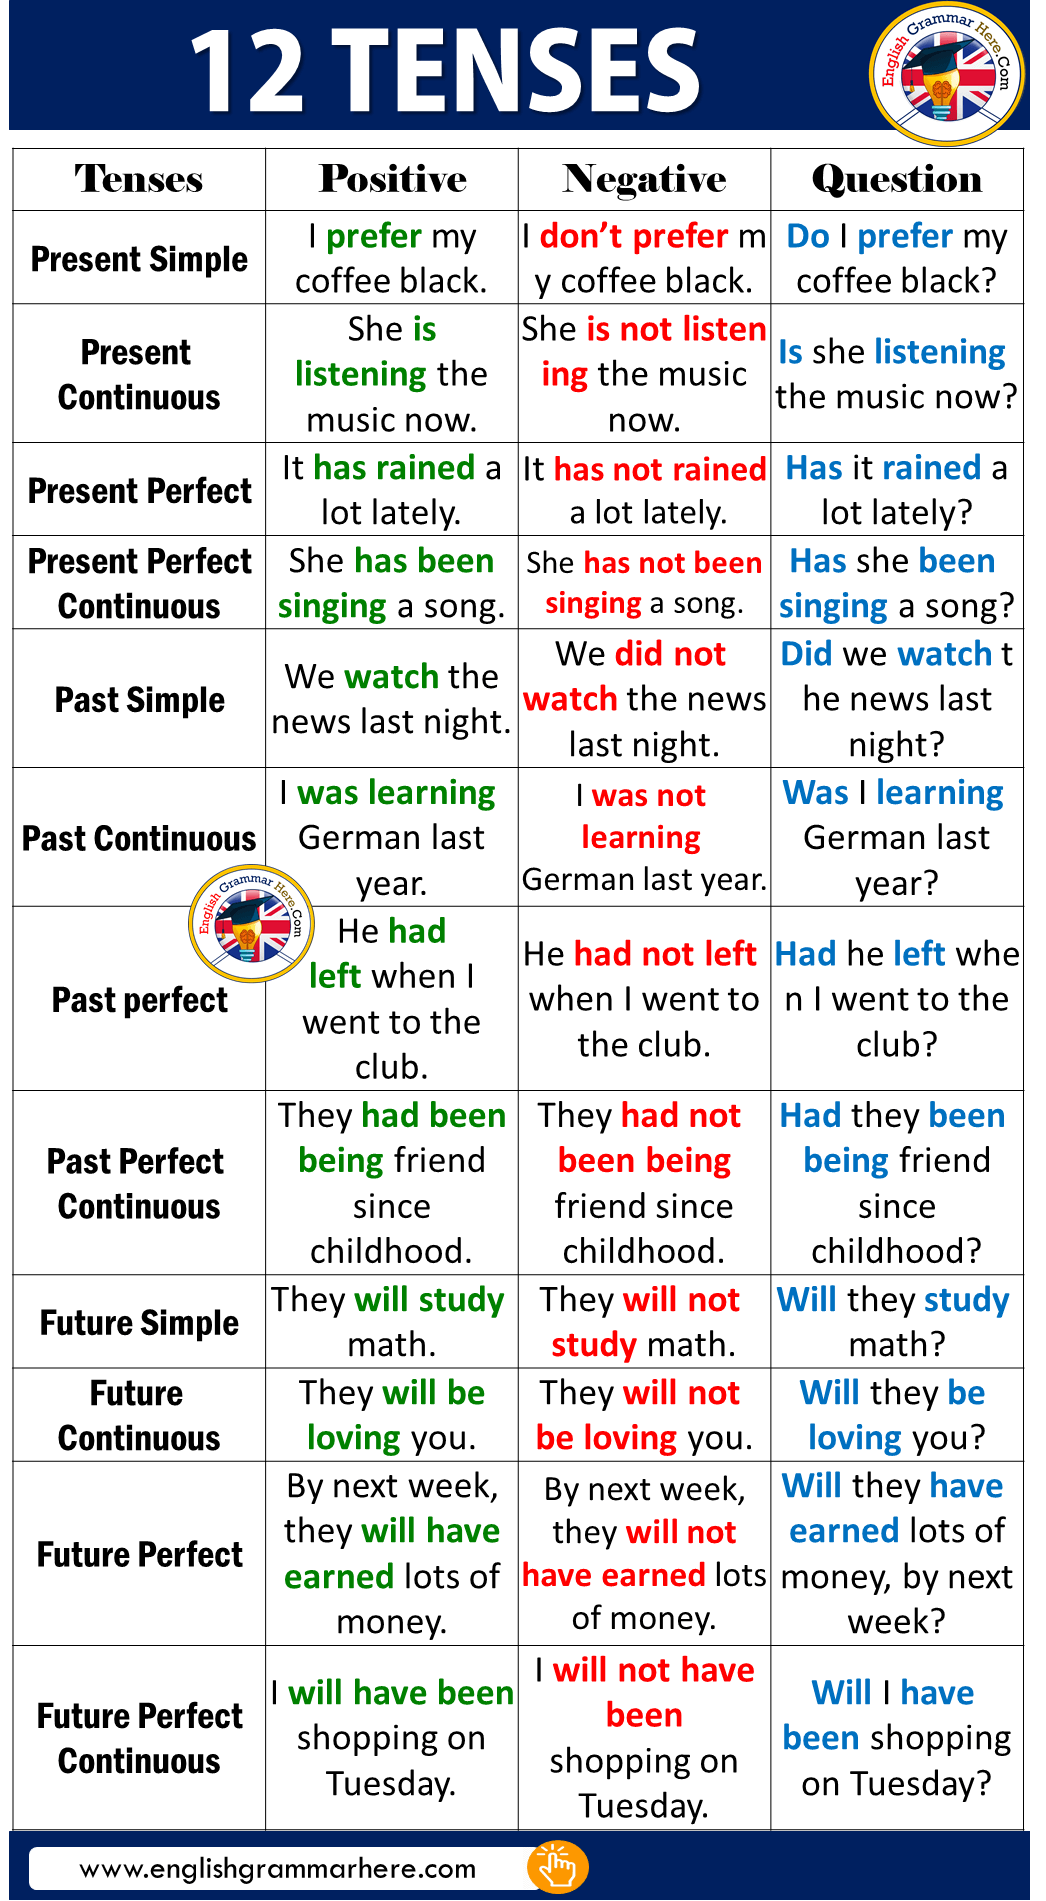 Get English Grammarly Sentence Images